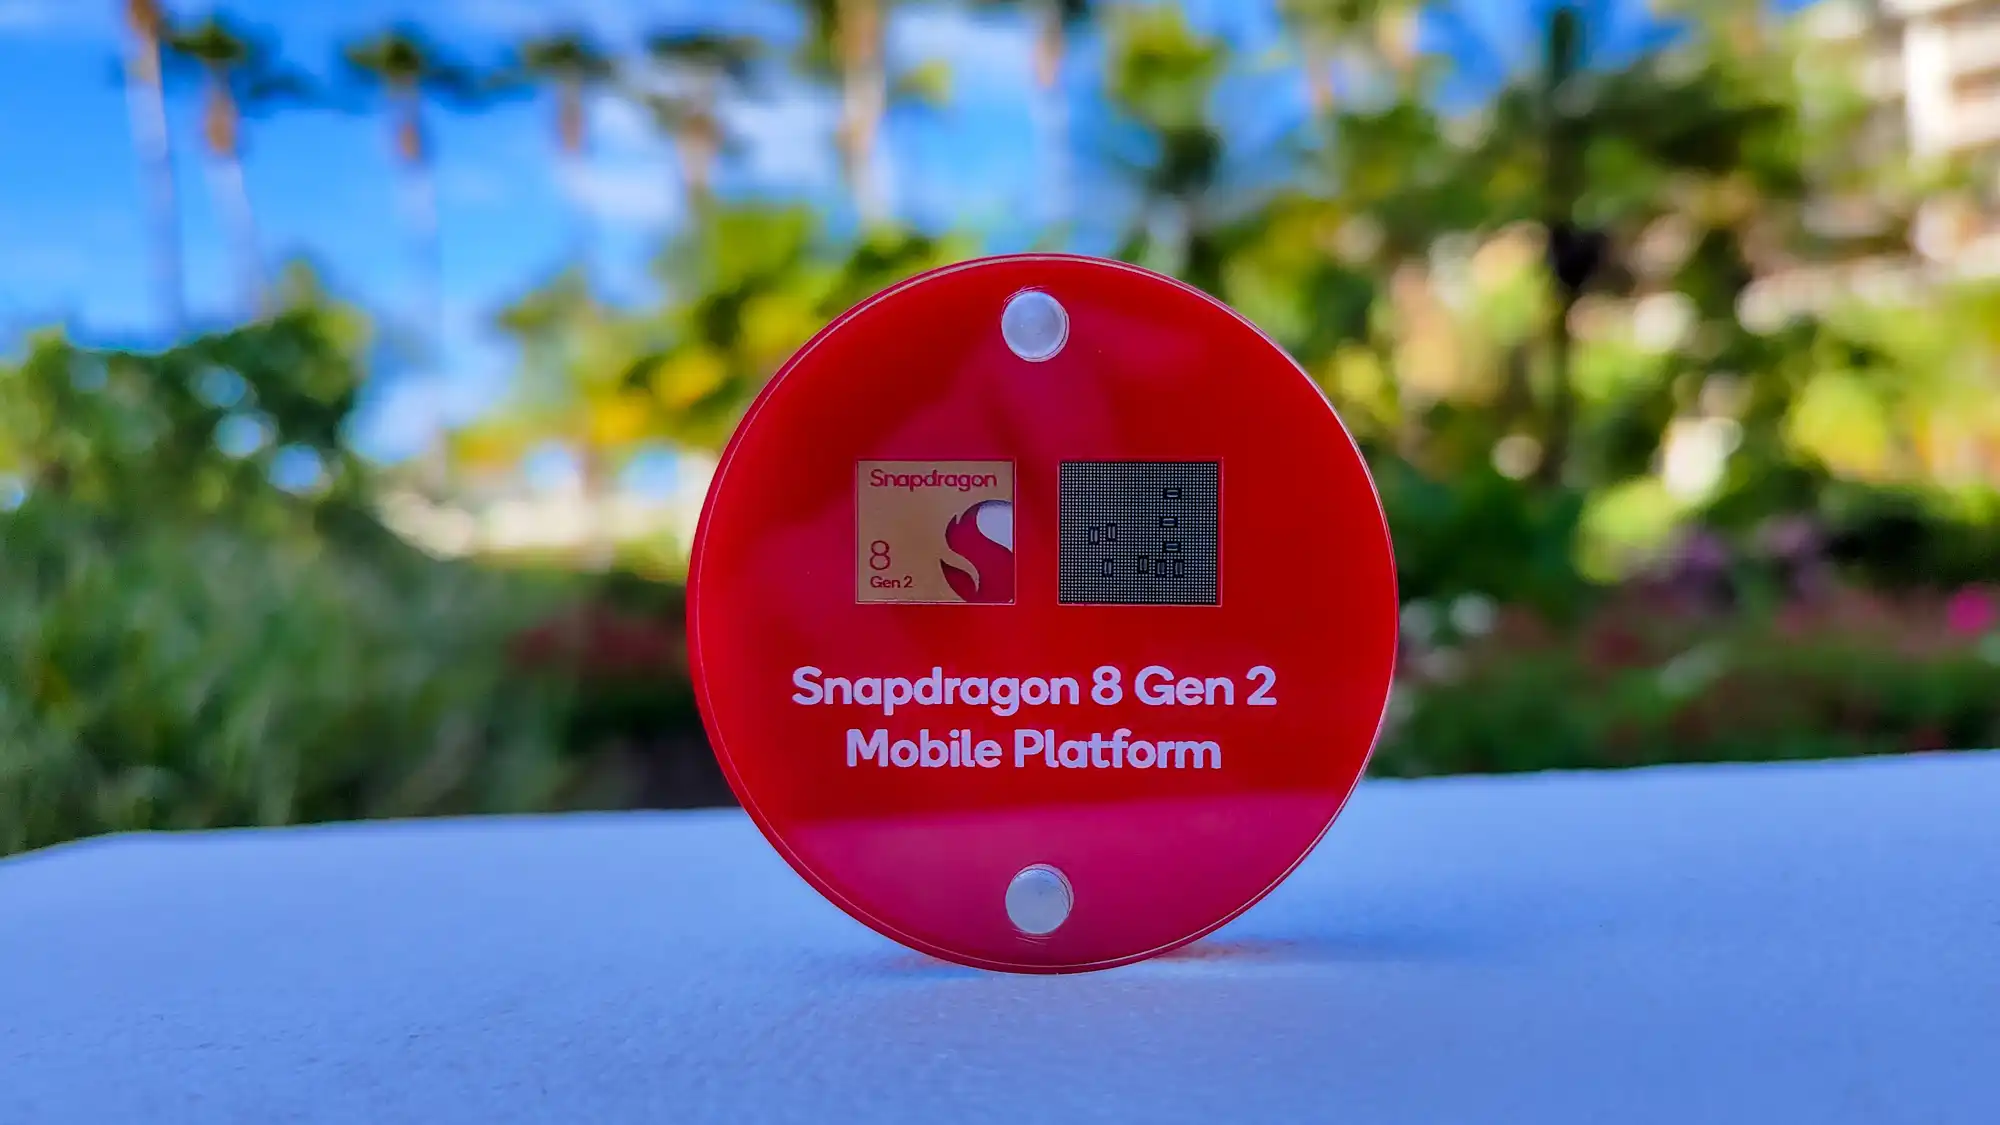 Qualcomm Snapdragon 8 Gen 2 chipset launched